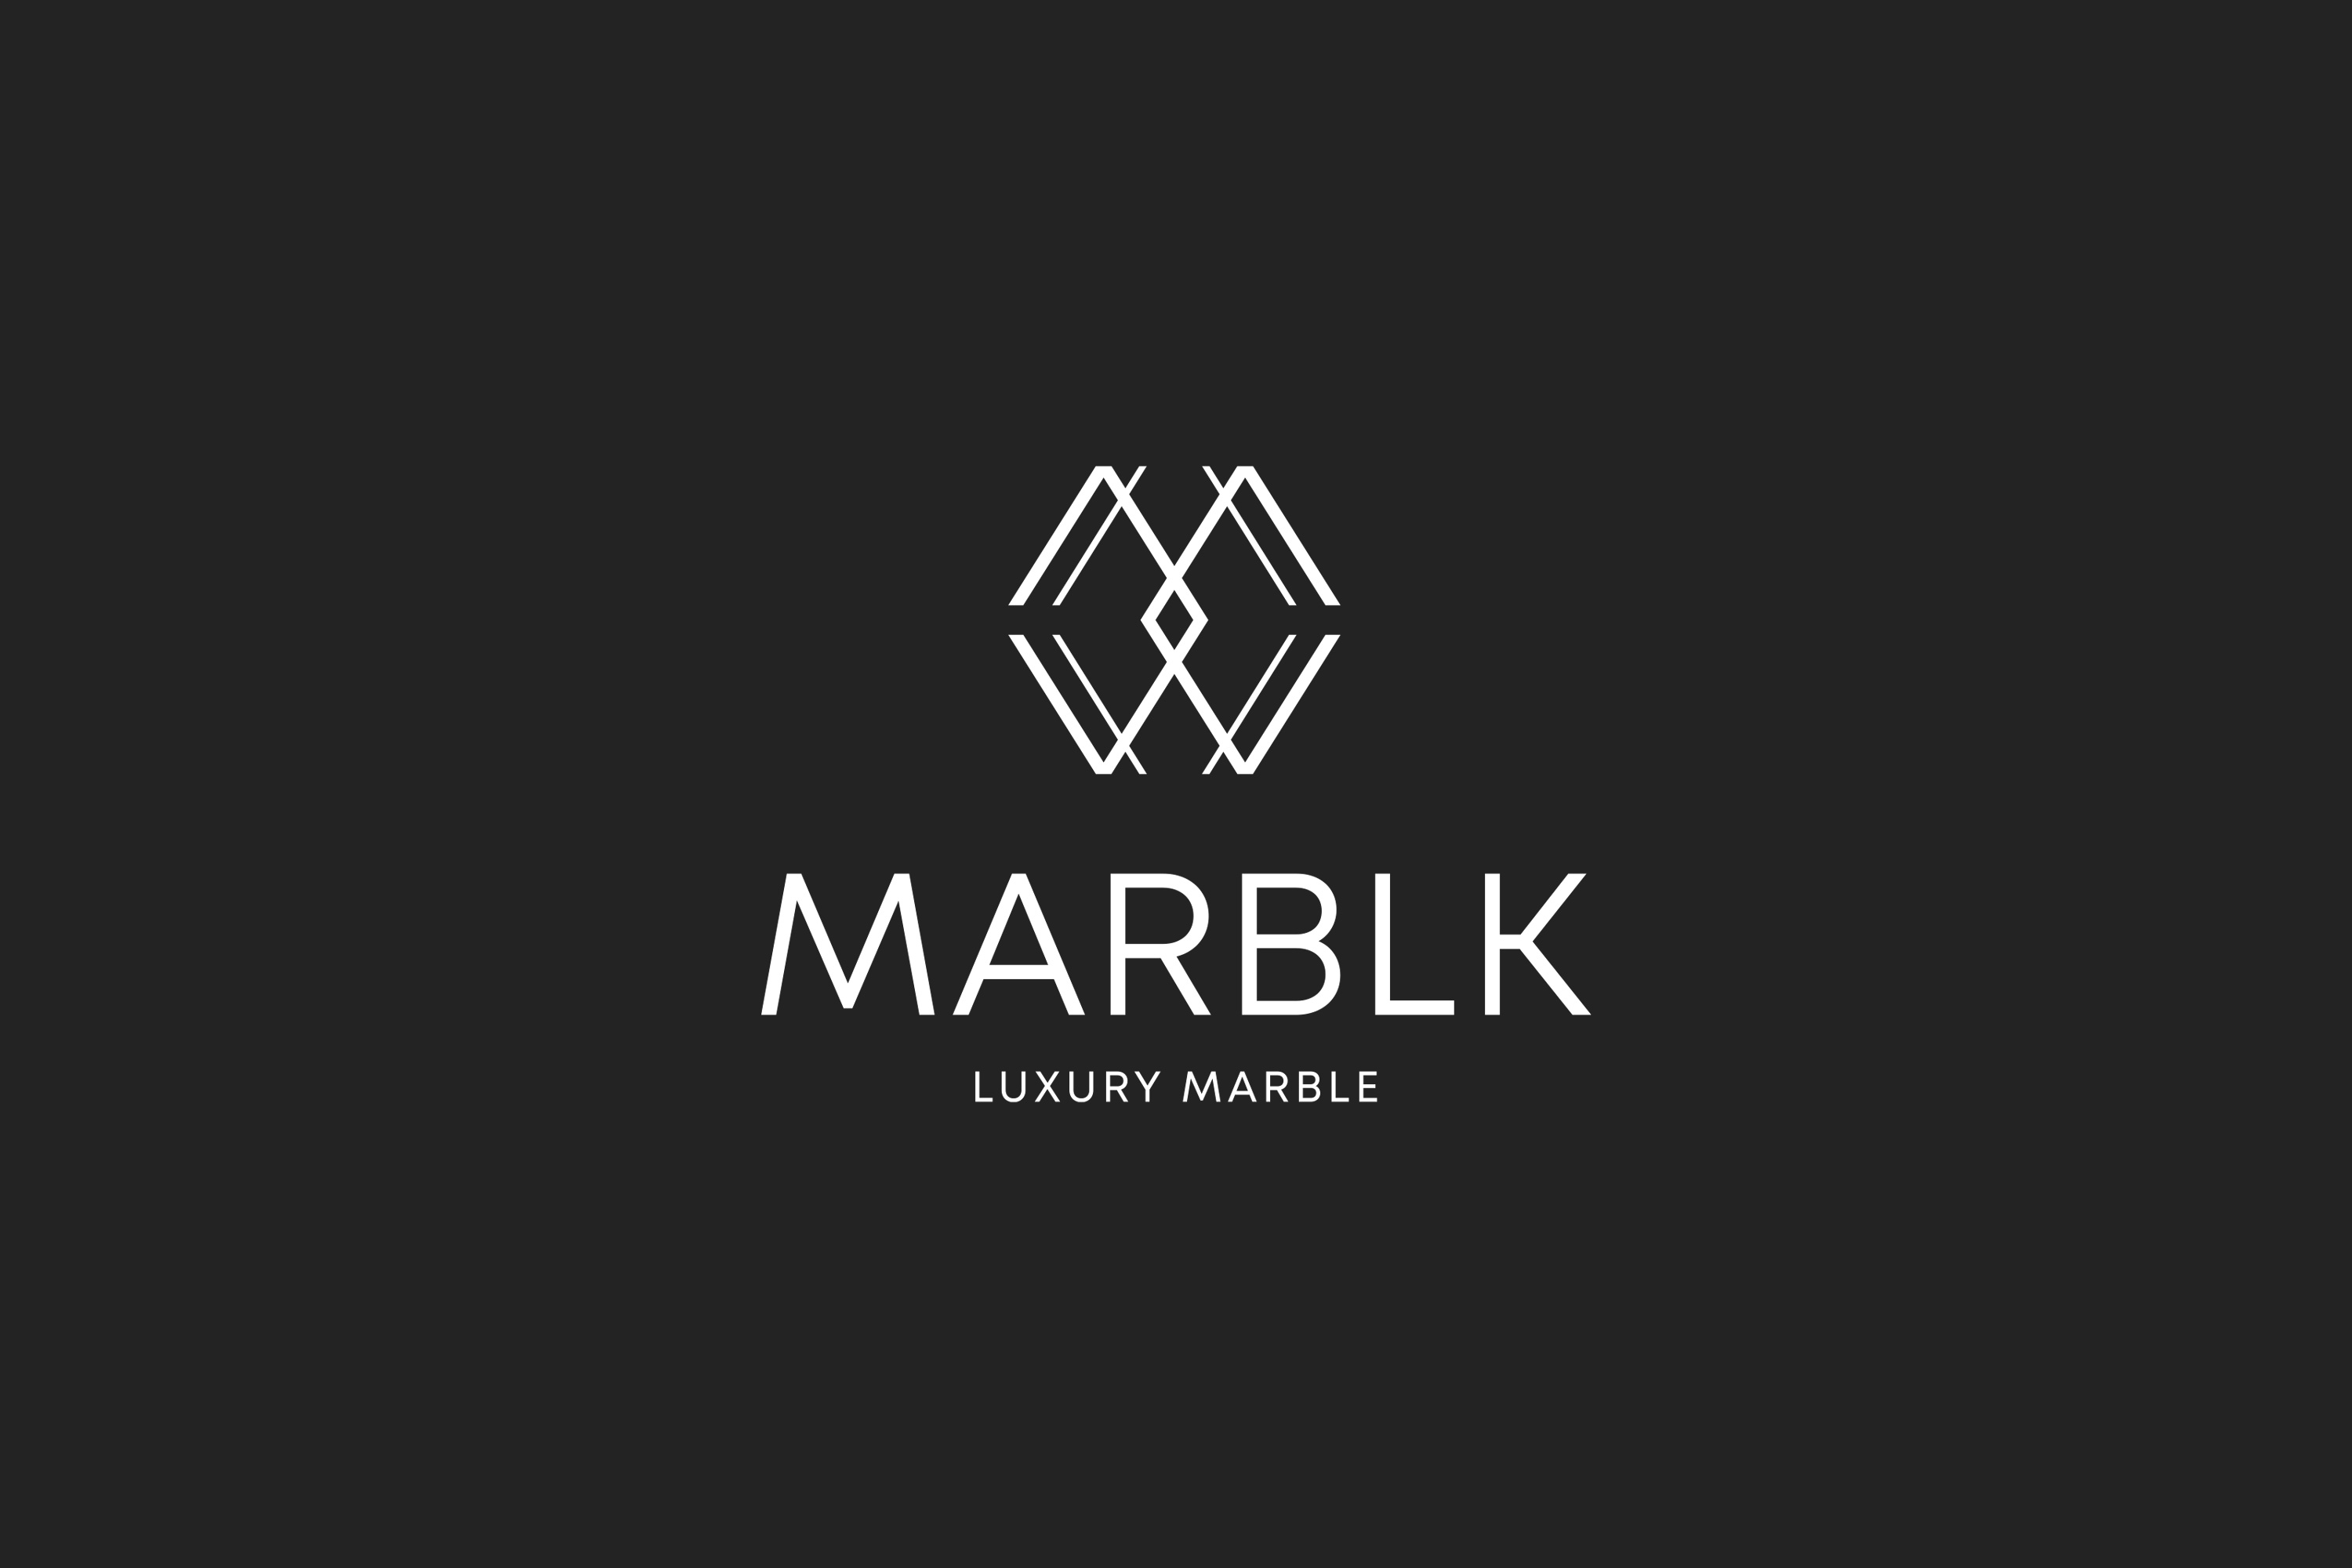 Marblk | Elsa Benoldi Graphic Design